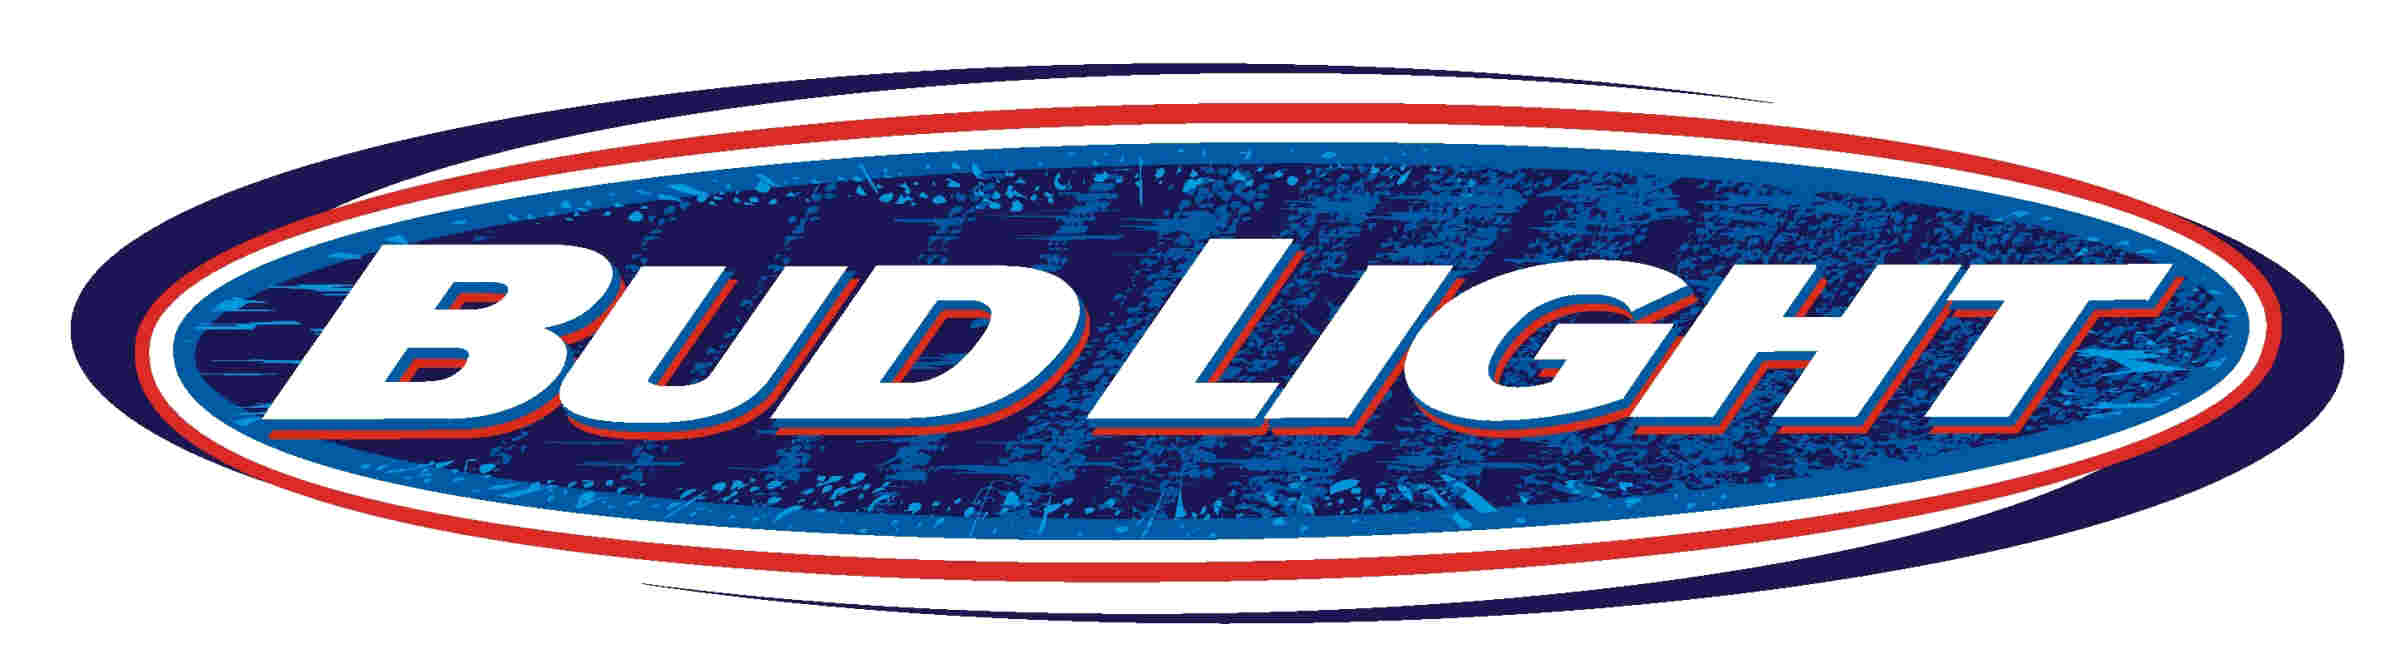 Free Bud Light Logo, Download Free Clip Art, Free Clip Art.